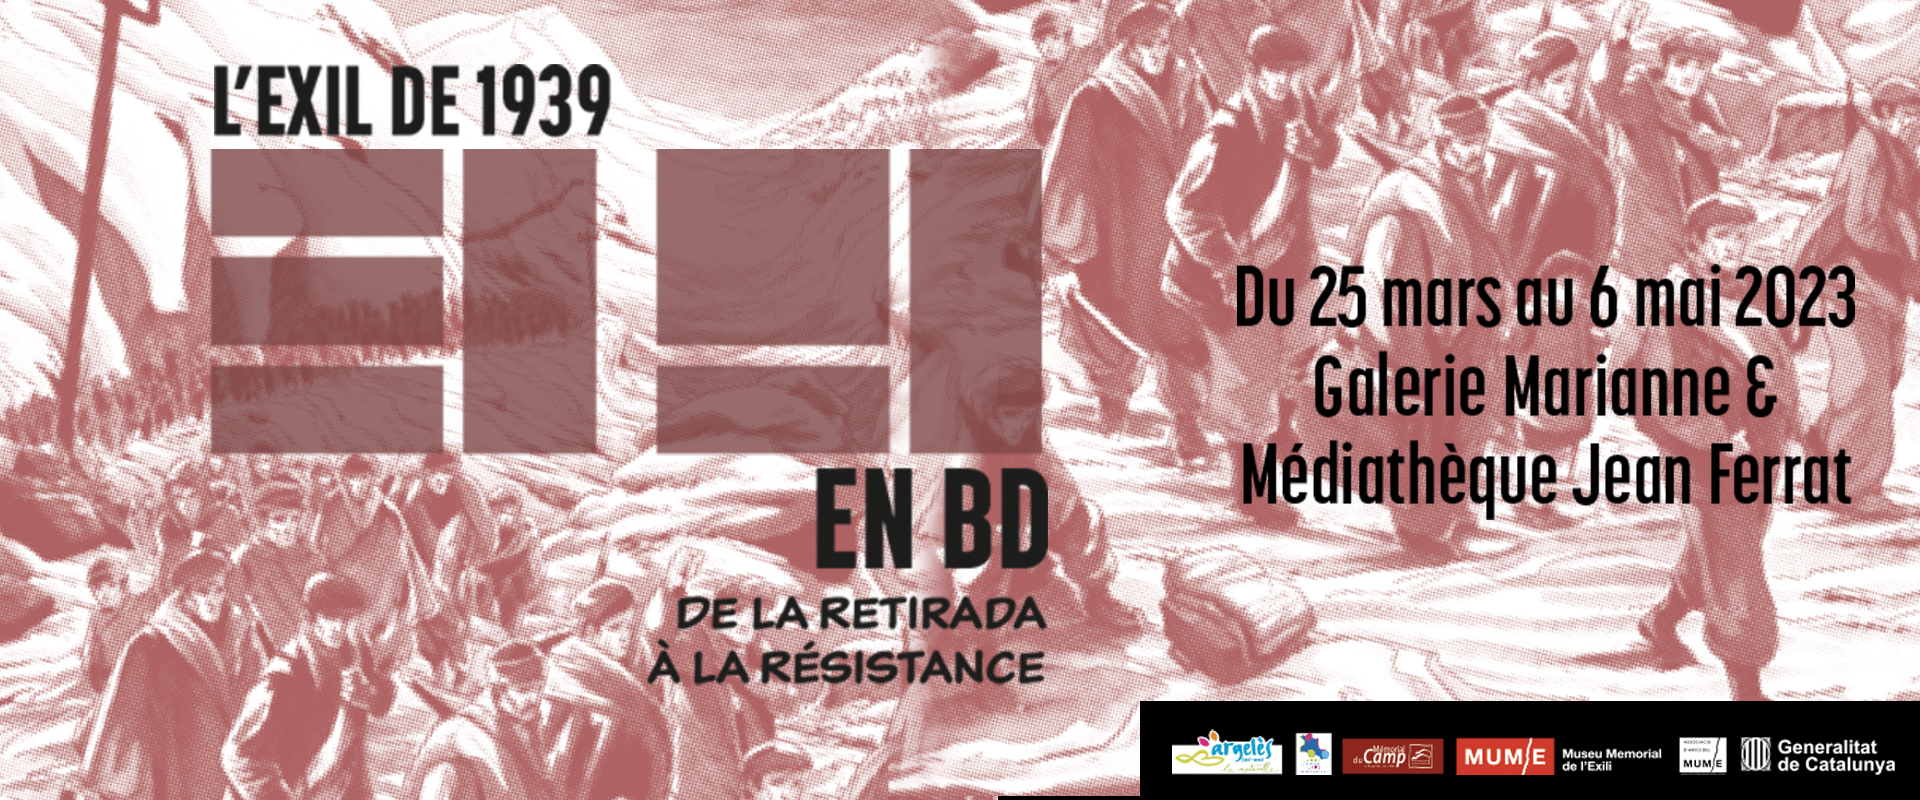 exposition-exile-1939-retirada-argeles-sur-mer-25-mars-au-6-mai-2023